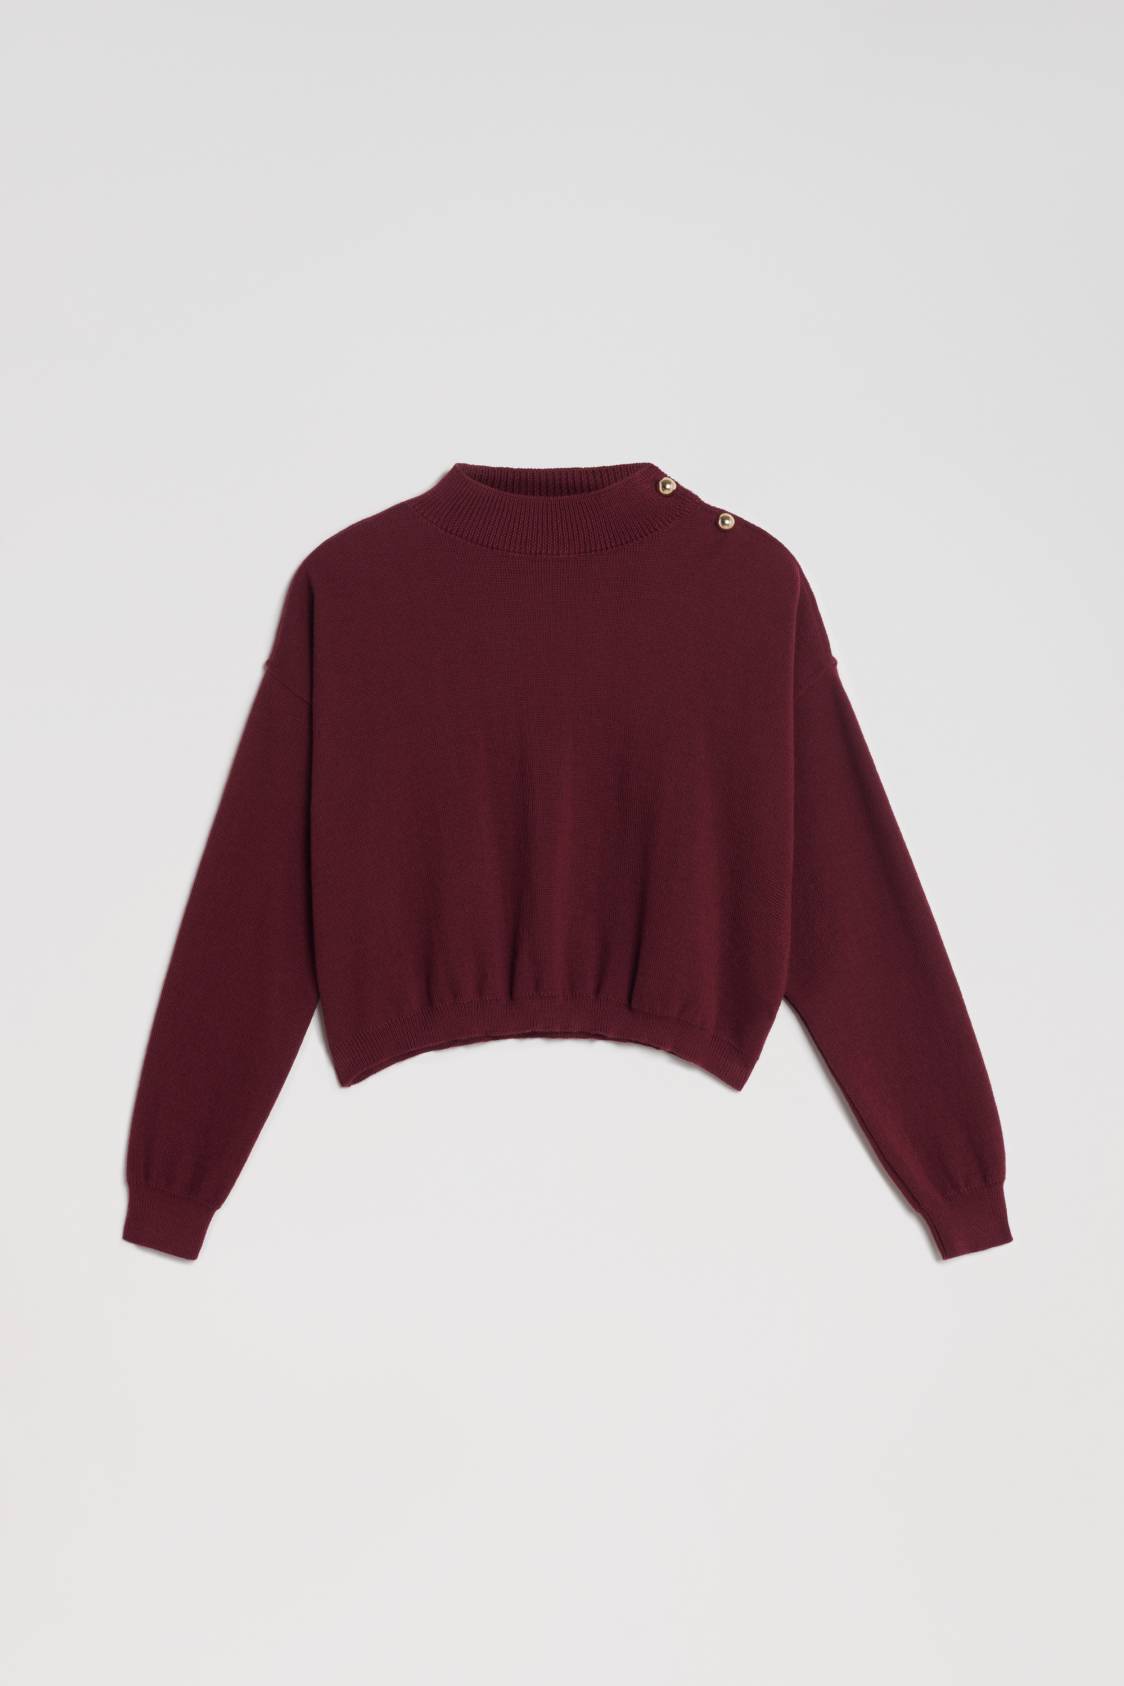 Le Mont Saint Michel Sariana - Sweater -half Cardigan Knit